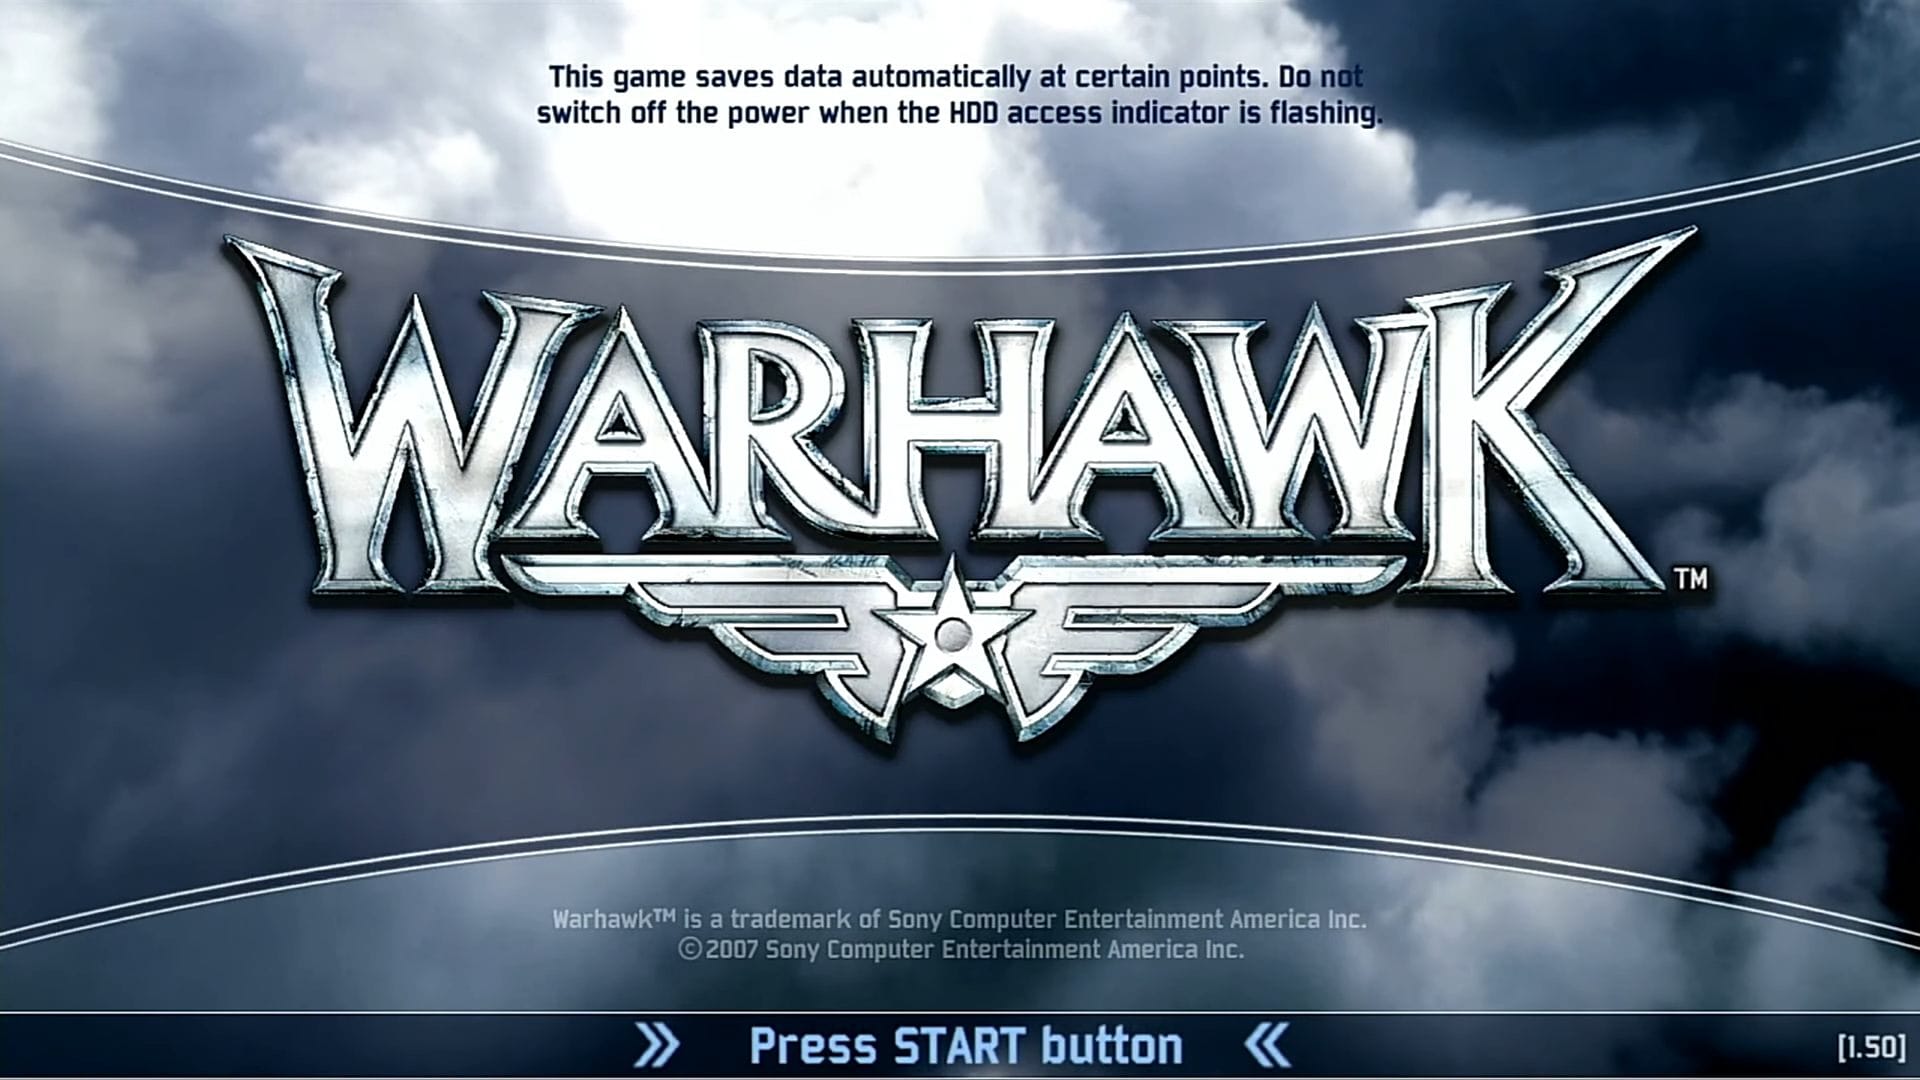 Warhawk (Game Only) - PlayStation 3